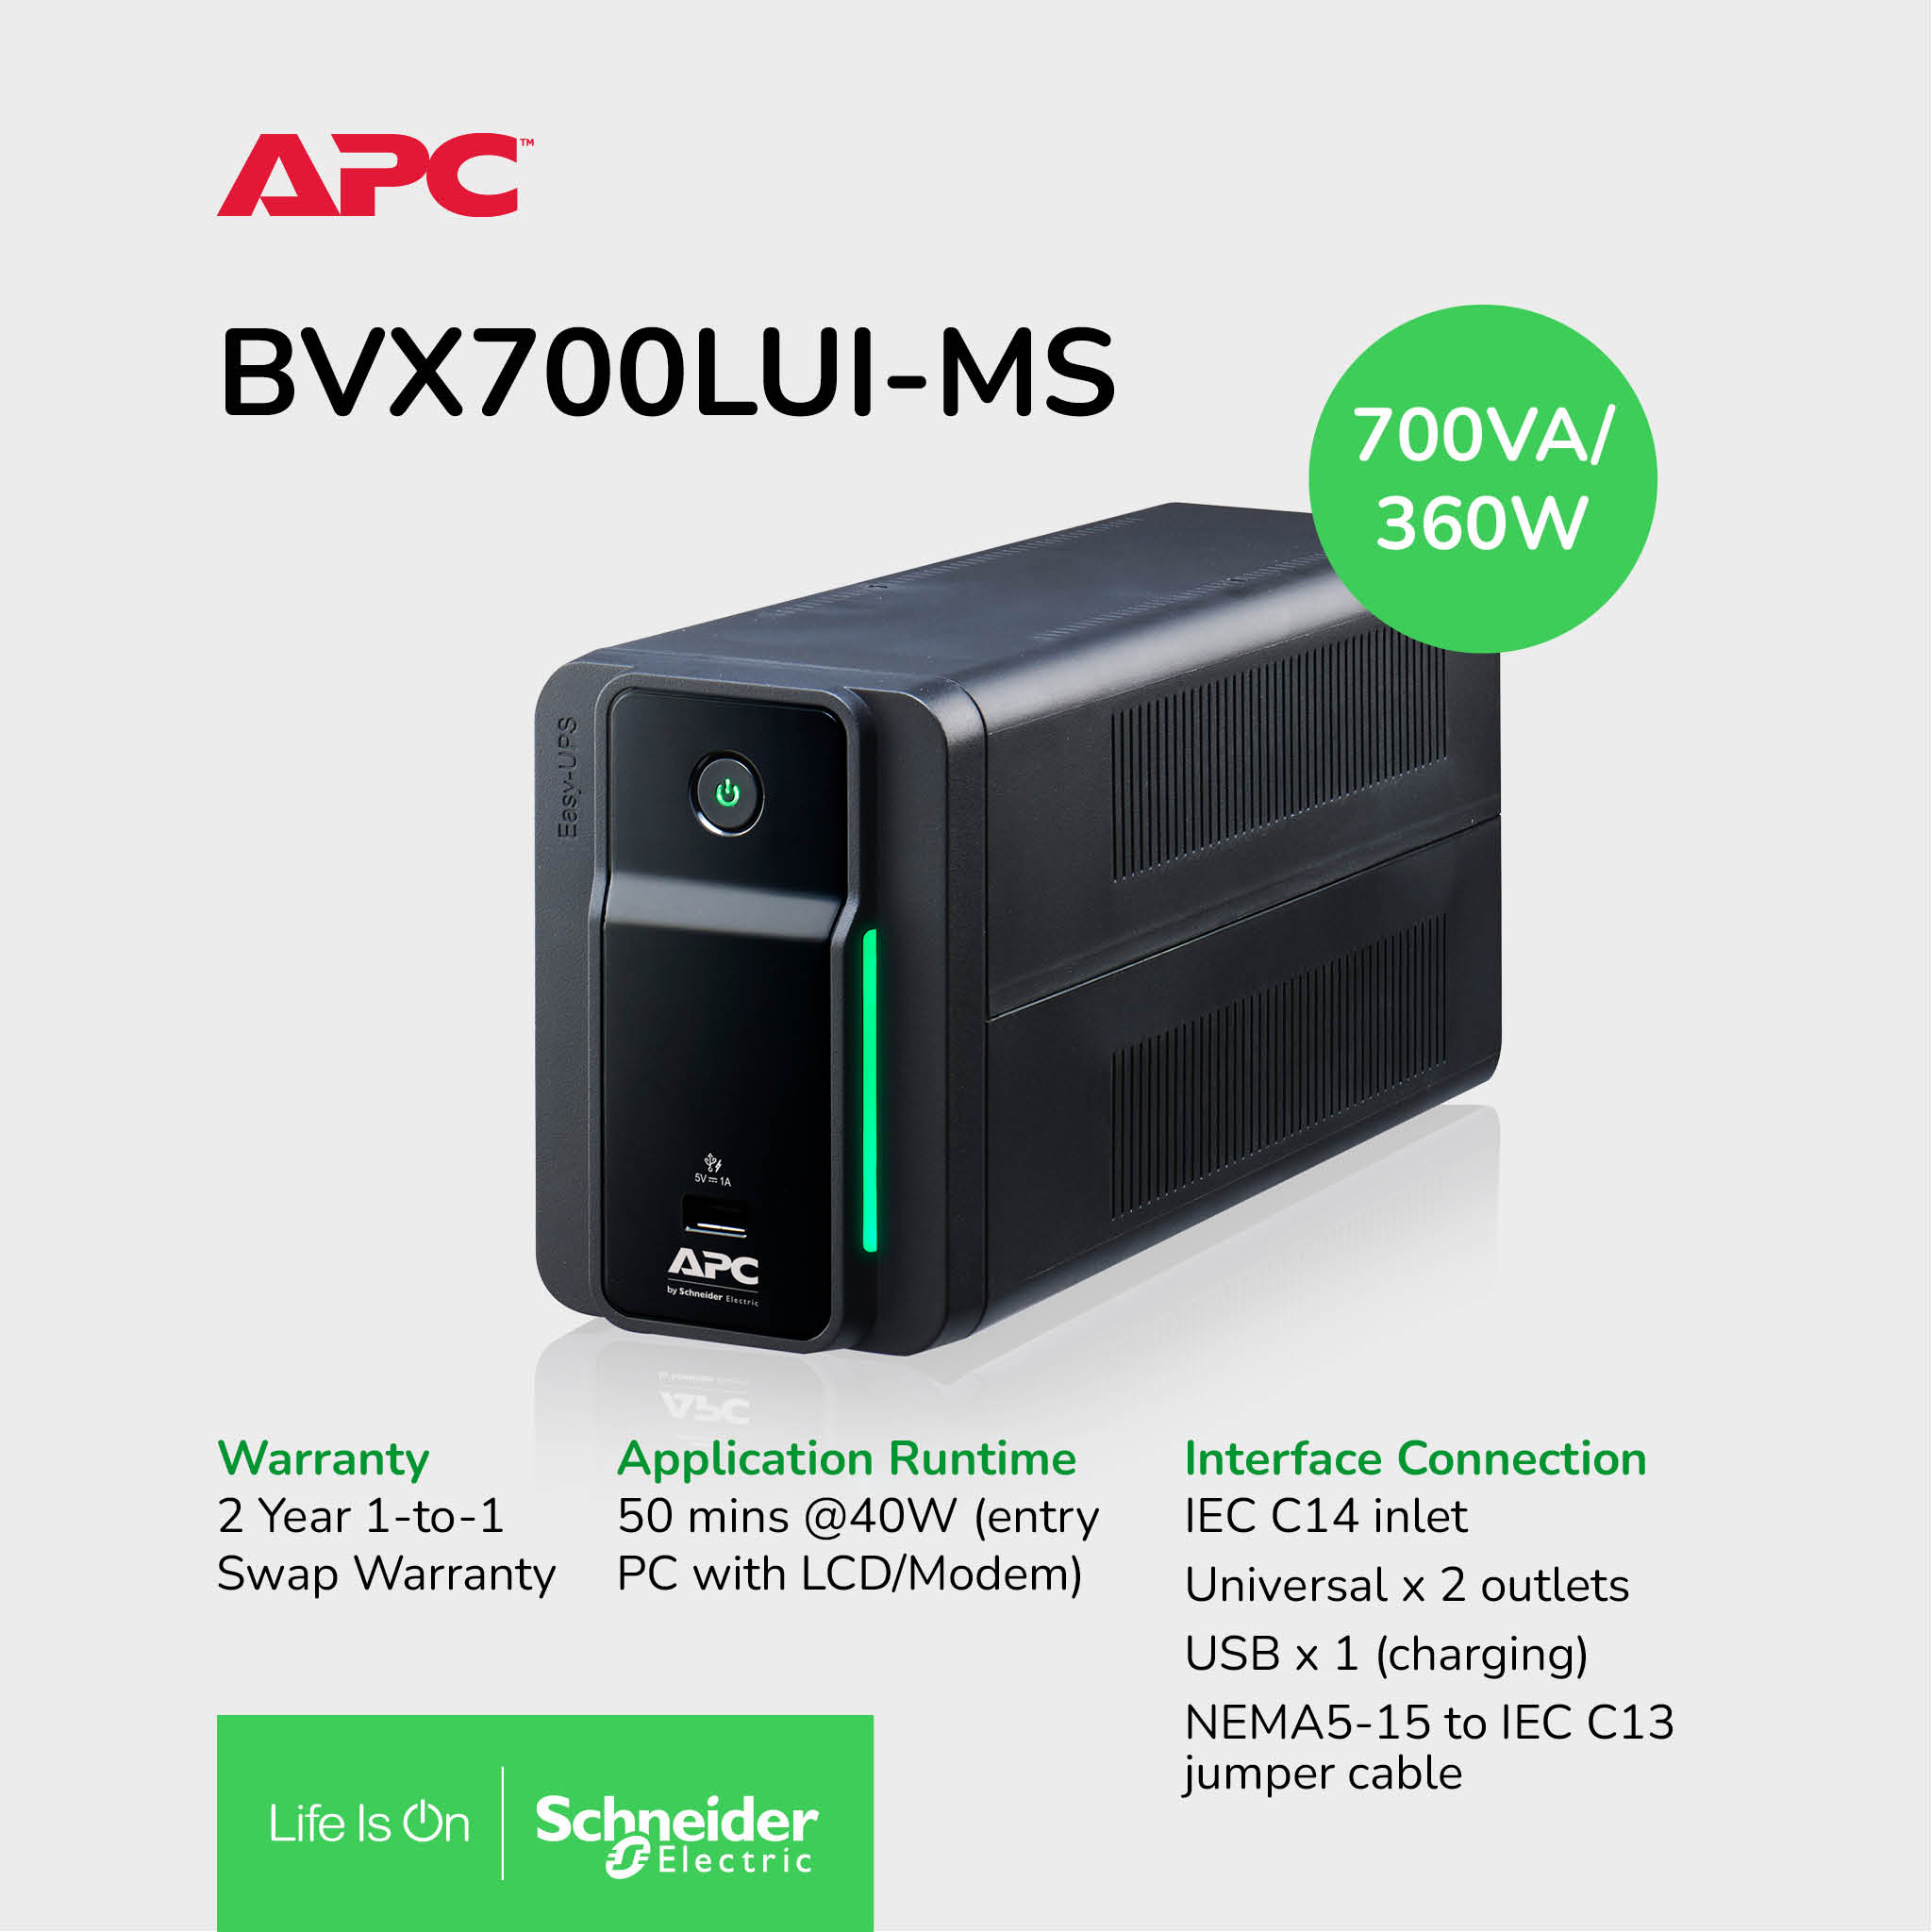 APC - APC Back-UPS - Onduleur - 950VA - Onduleur - APC